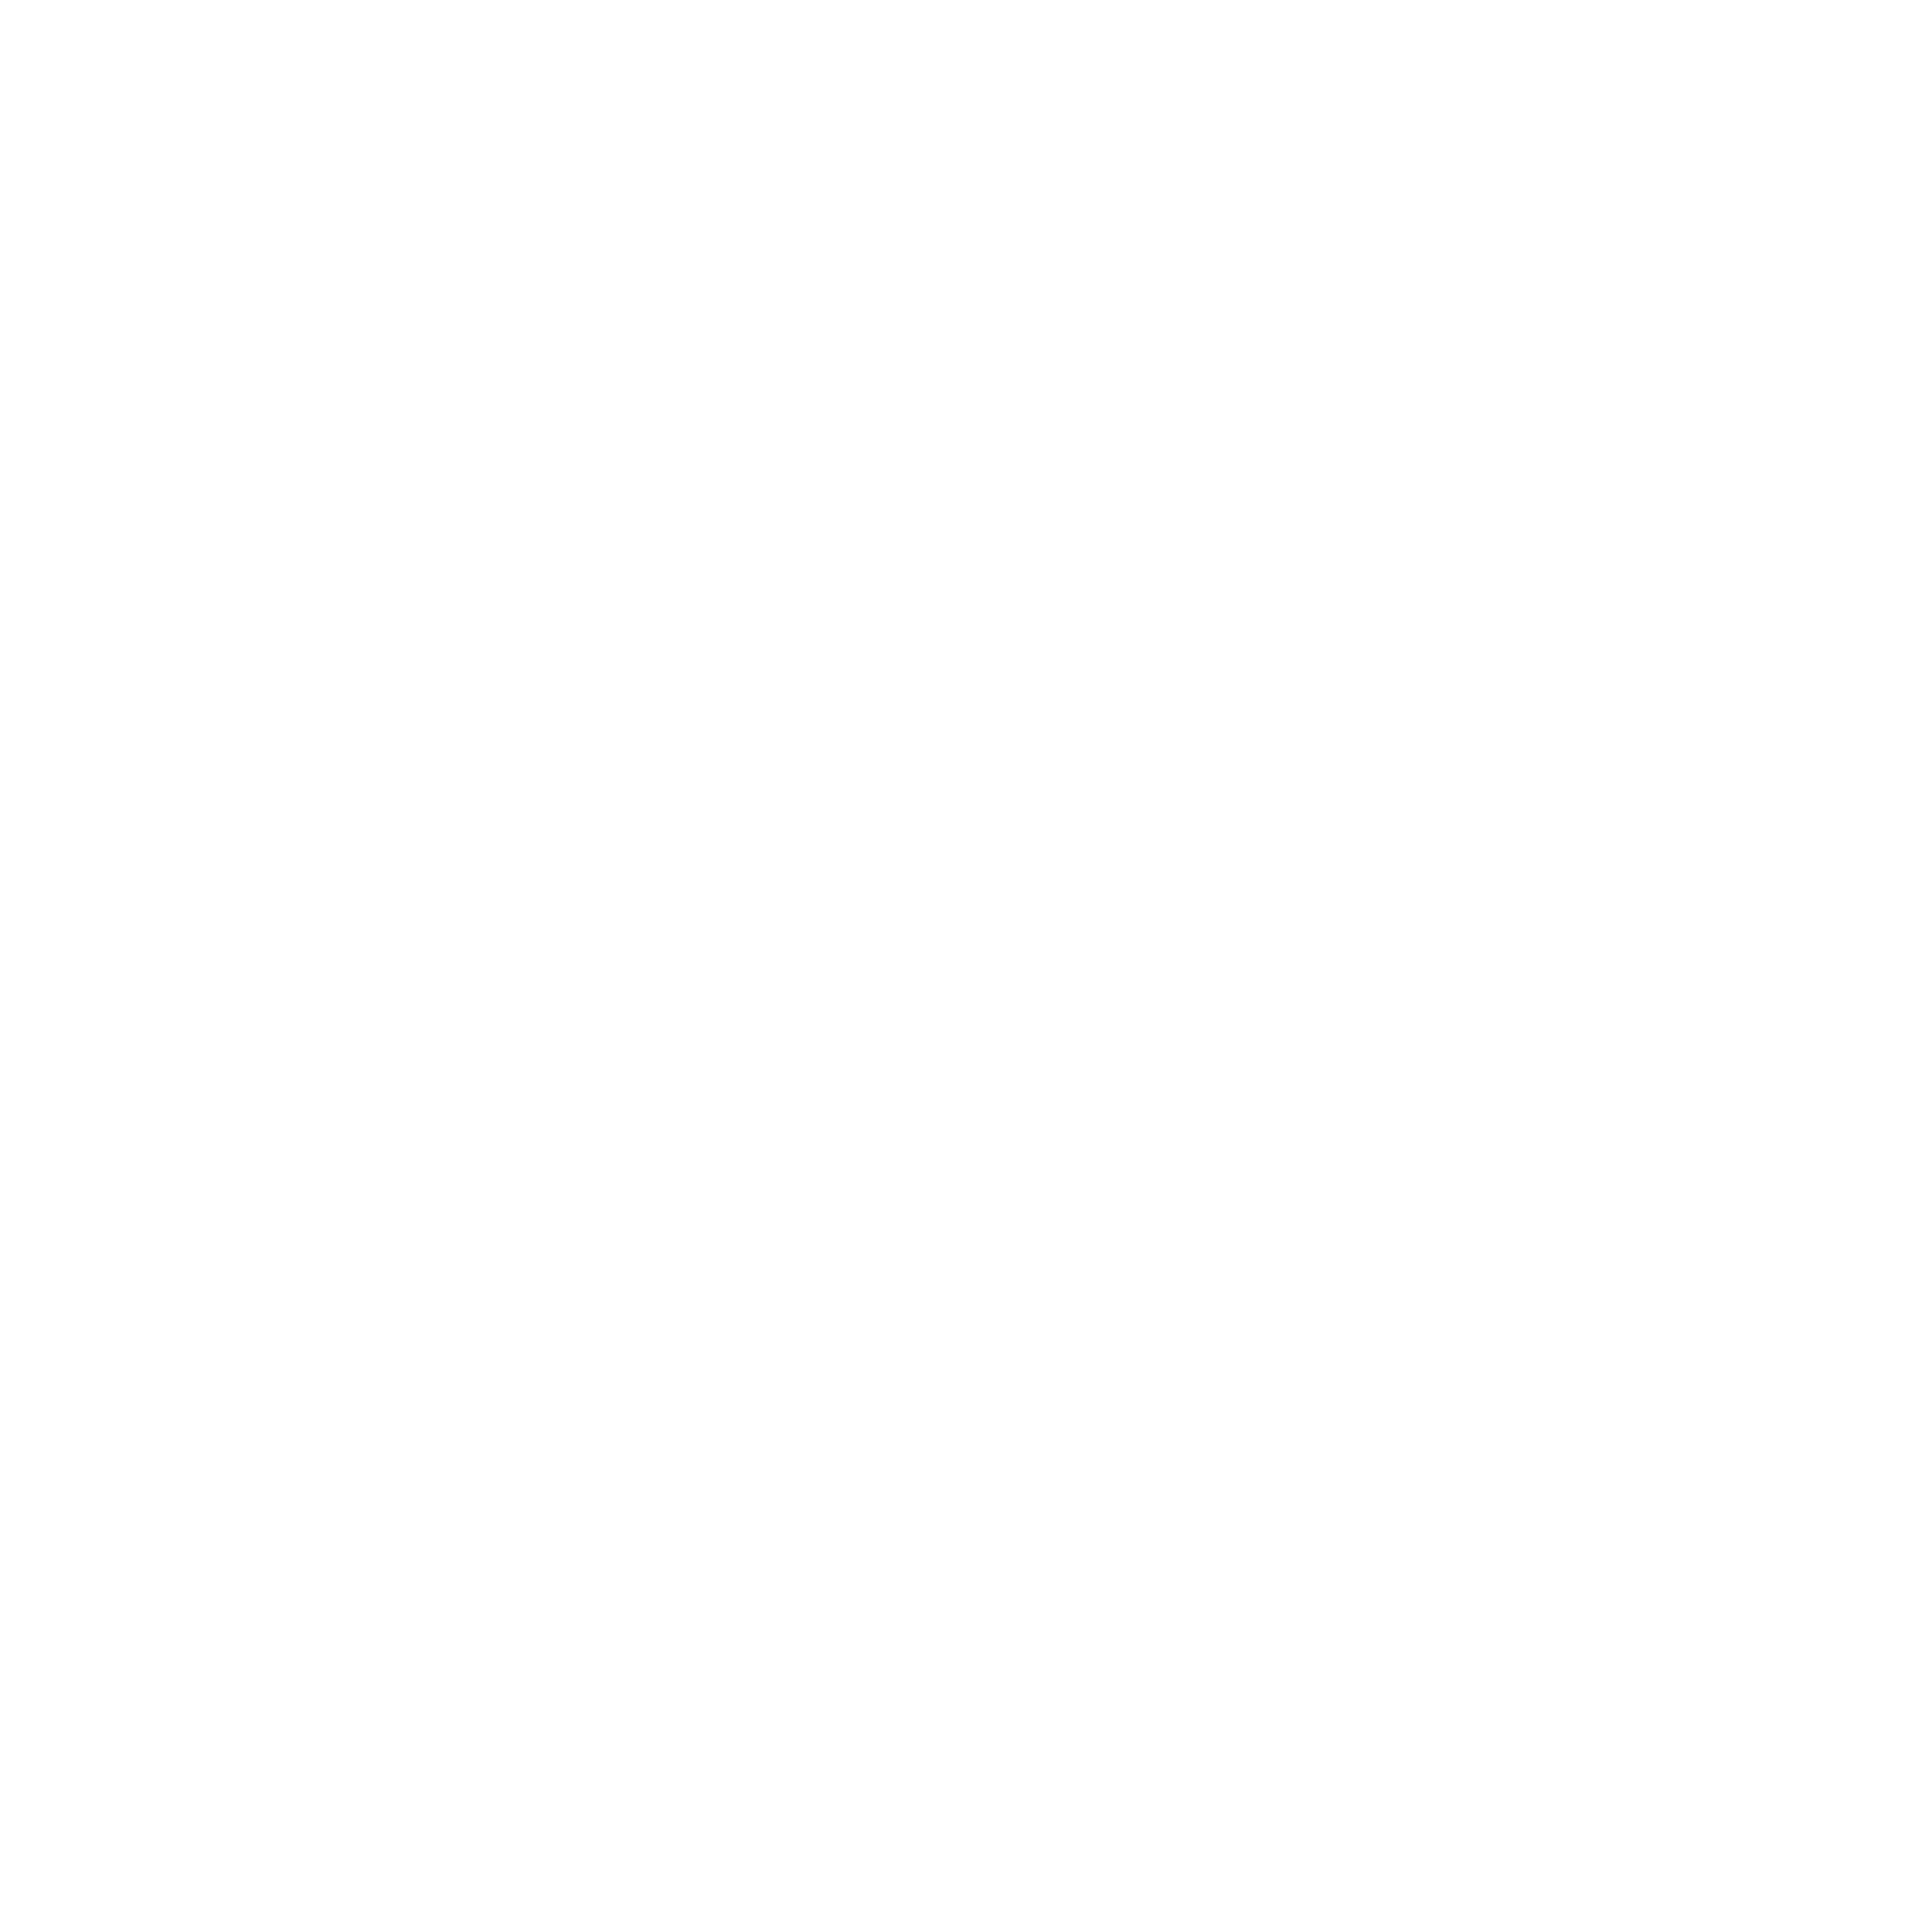 Cephalon Logo - Cephalon Logo PNG Transparent & SVG Vector - Freebie Supply